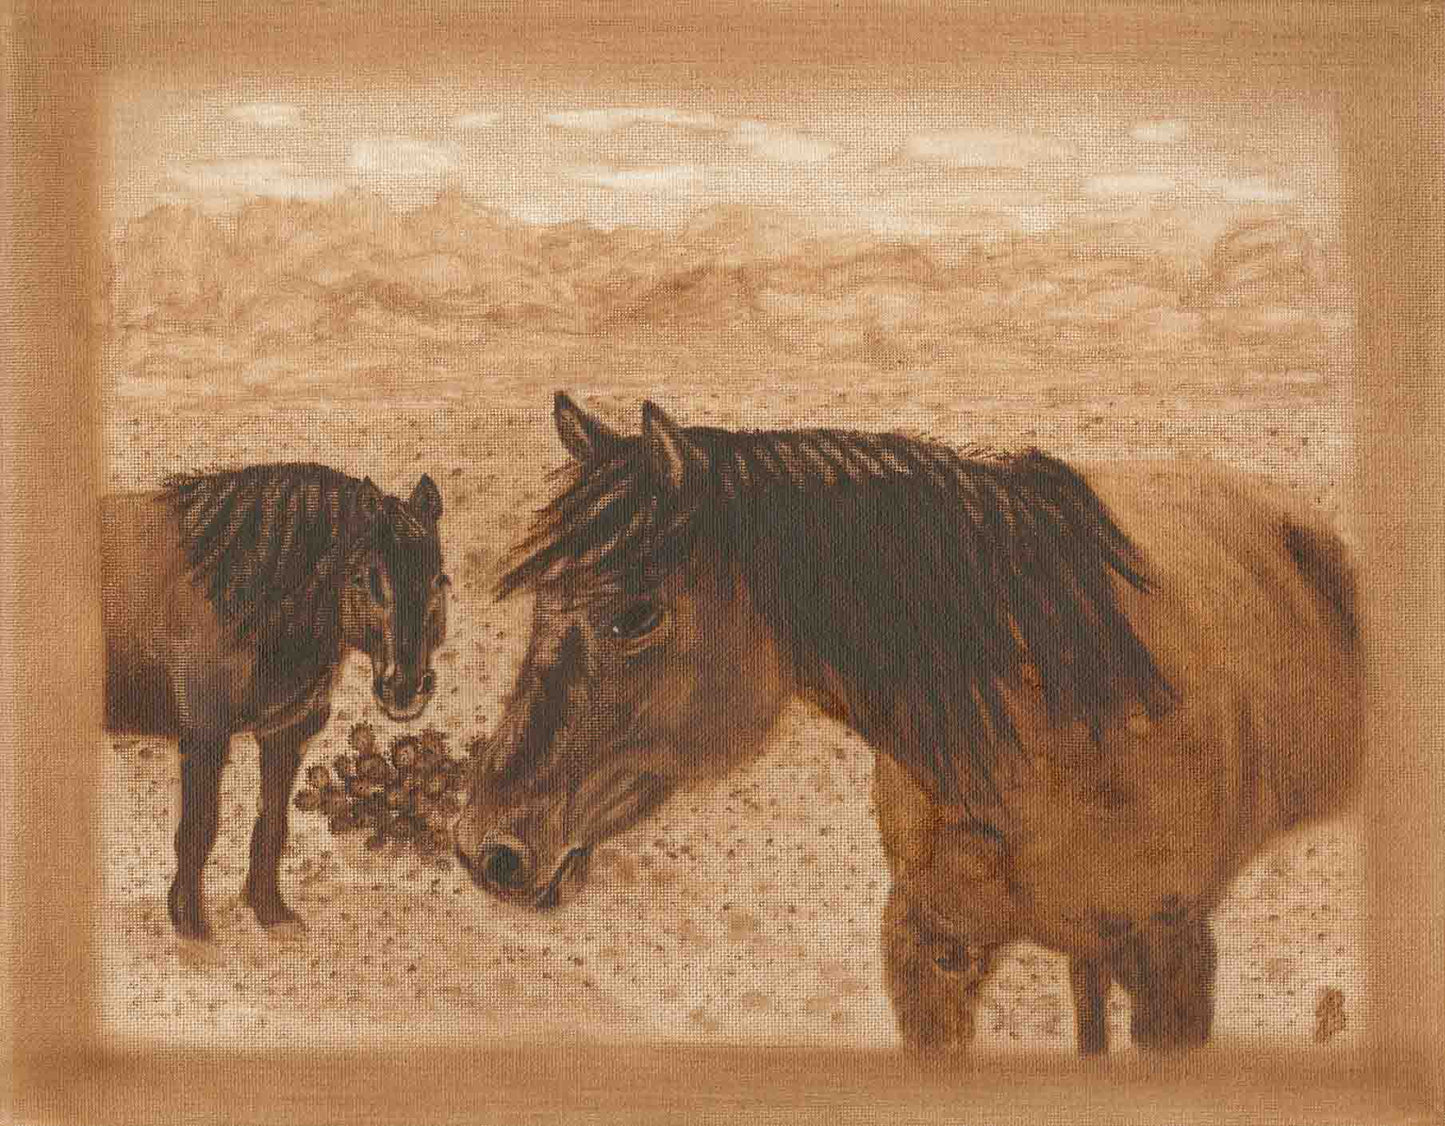 JBP-18 (14x 11) New Mexico Horses